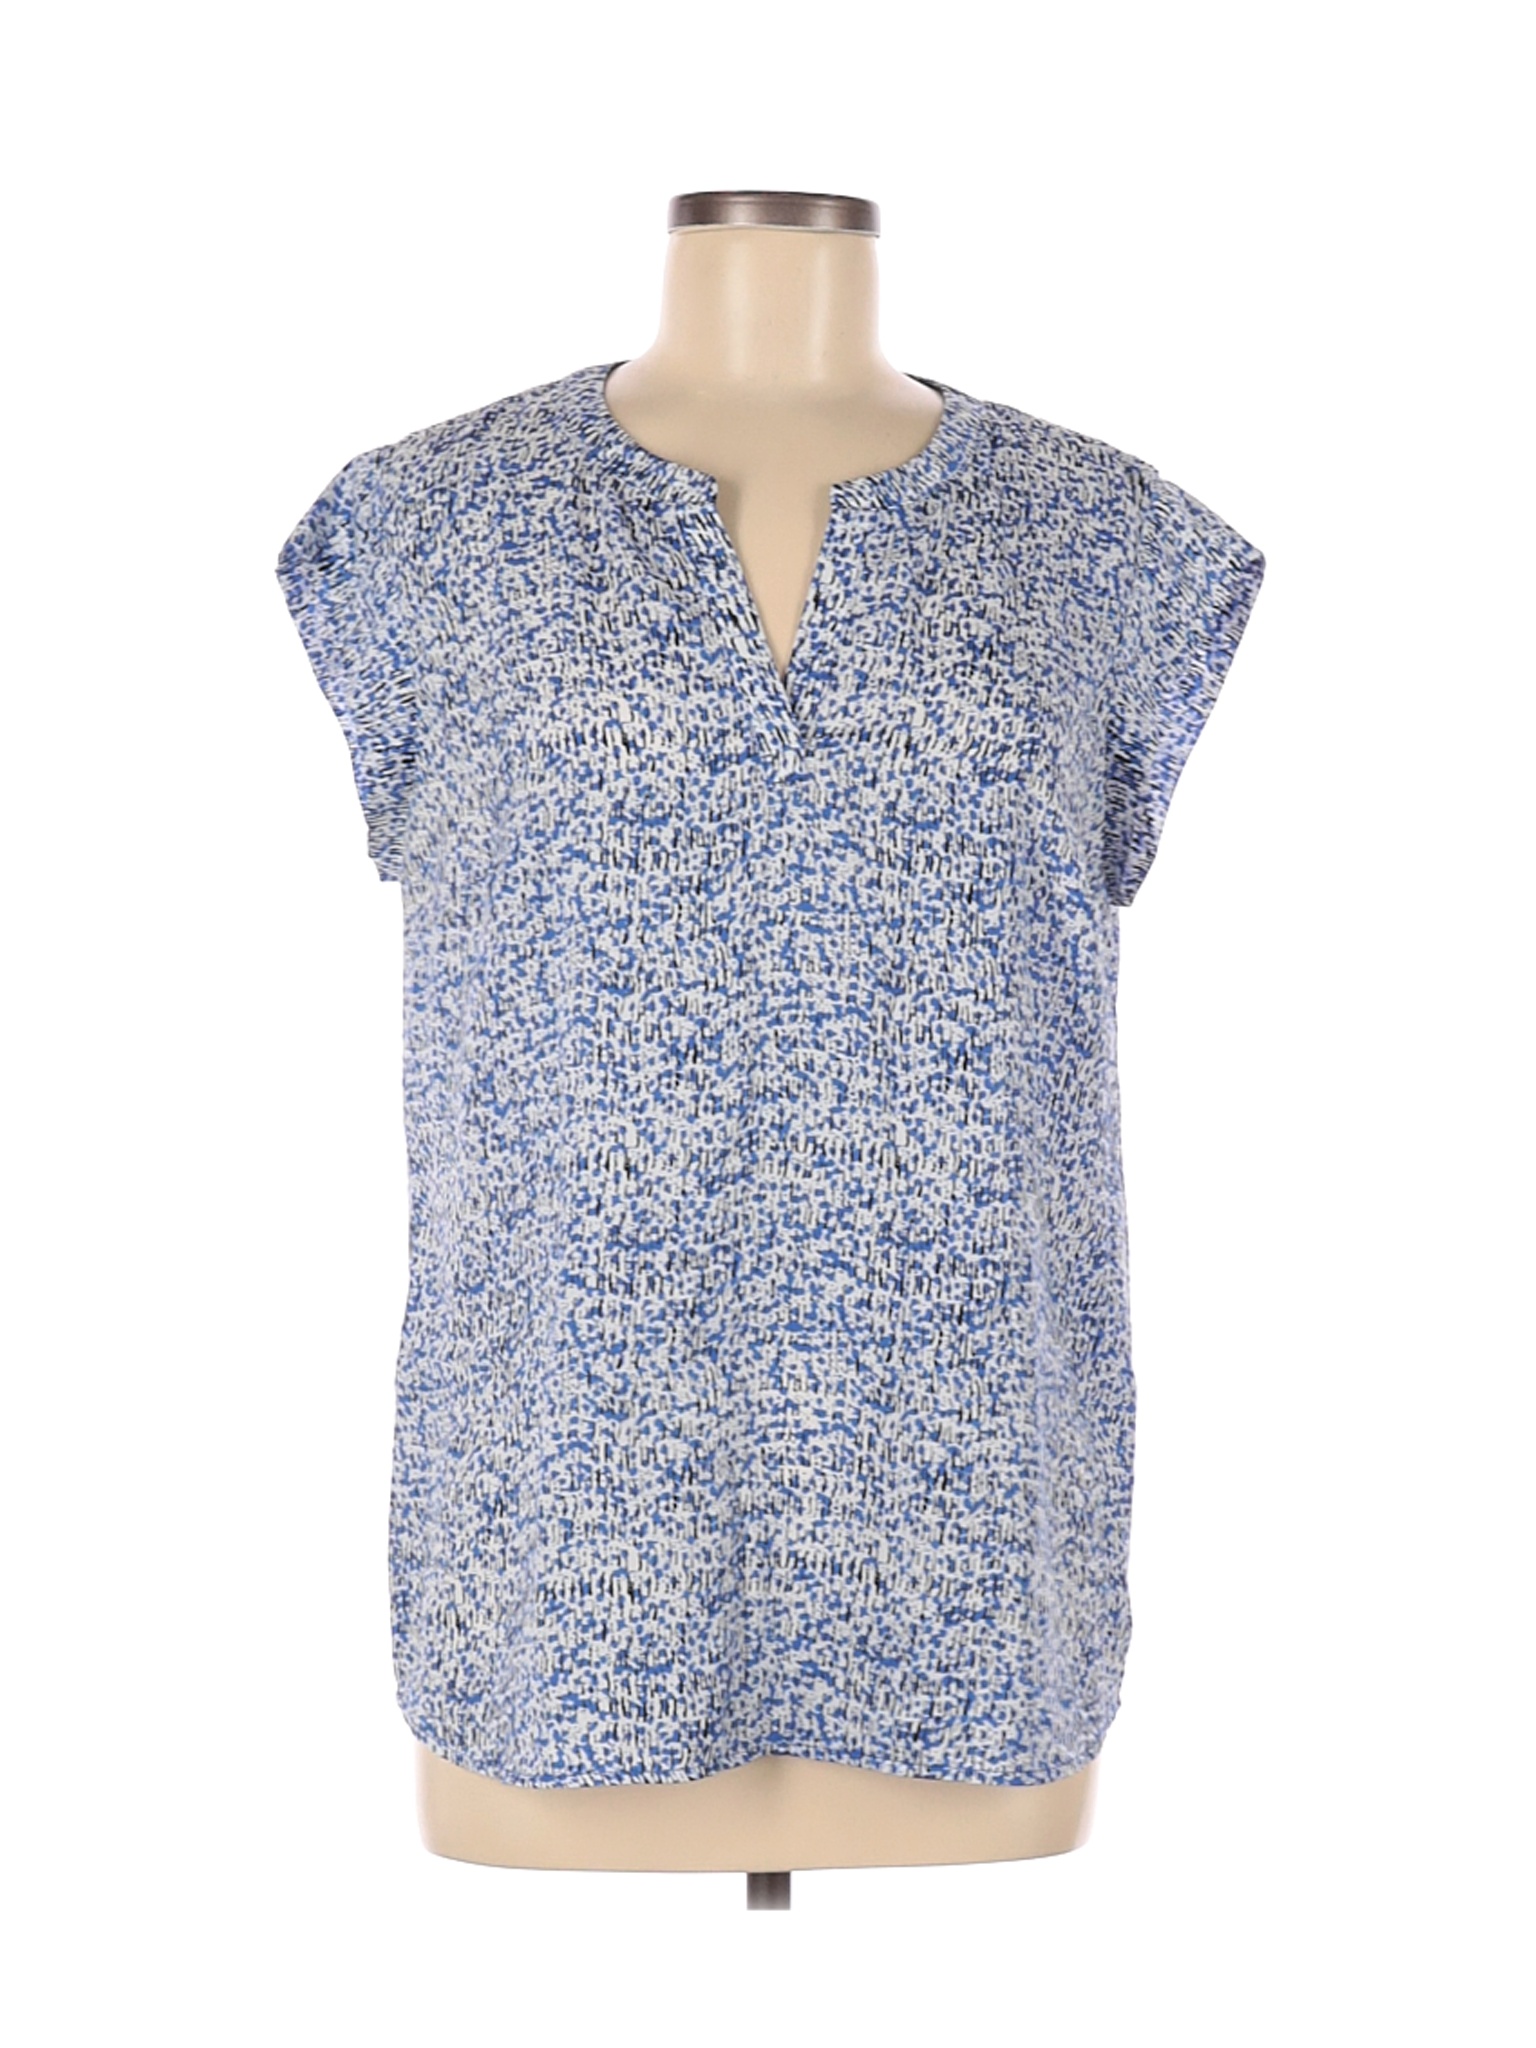 Hilary Radley Women Blue Short Sleeve Blouse M | eBay